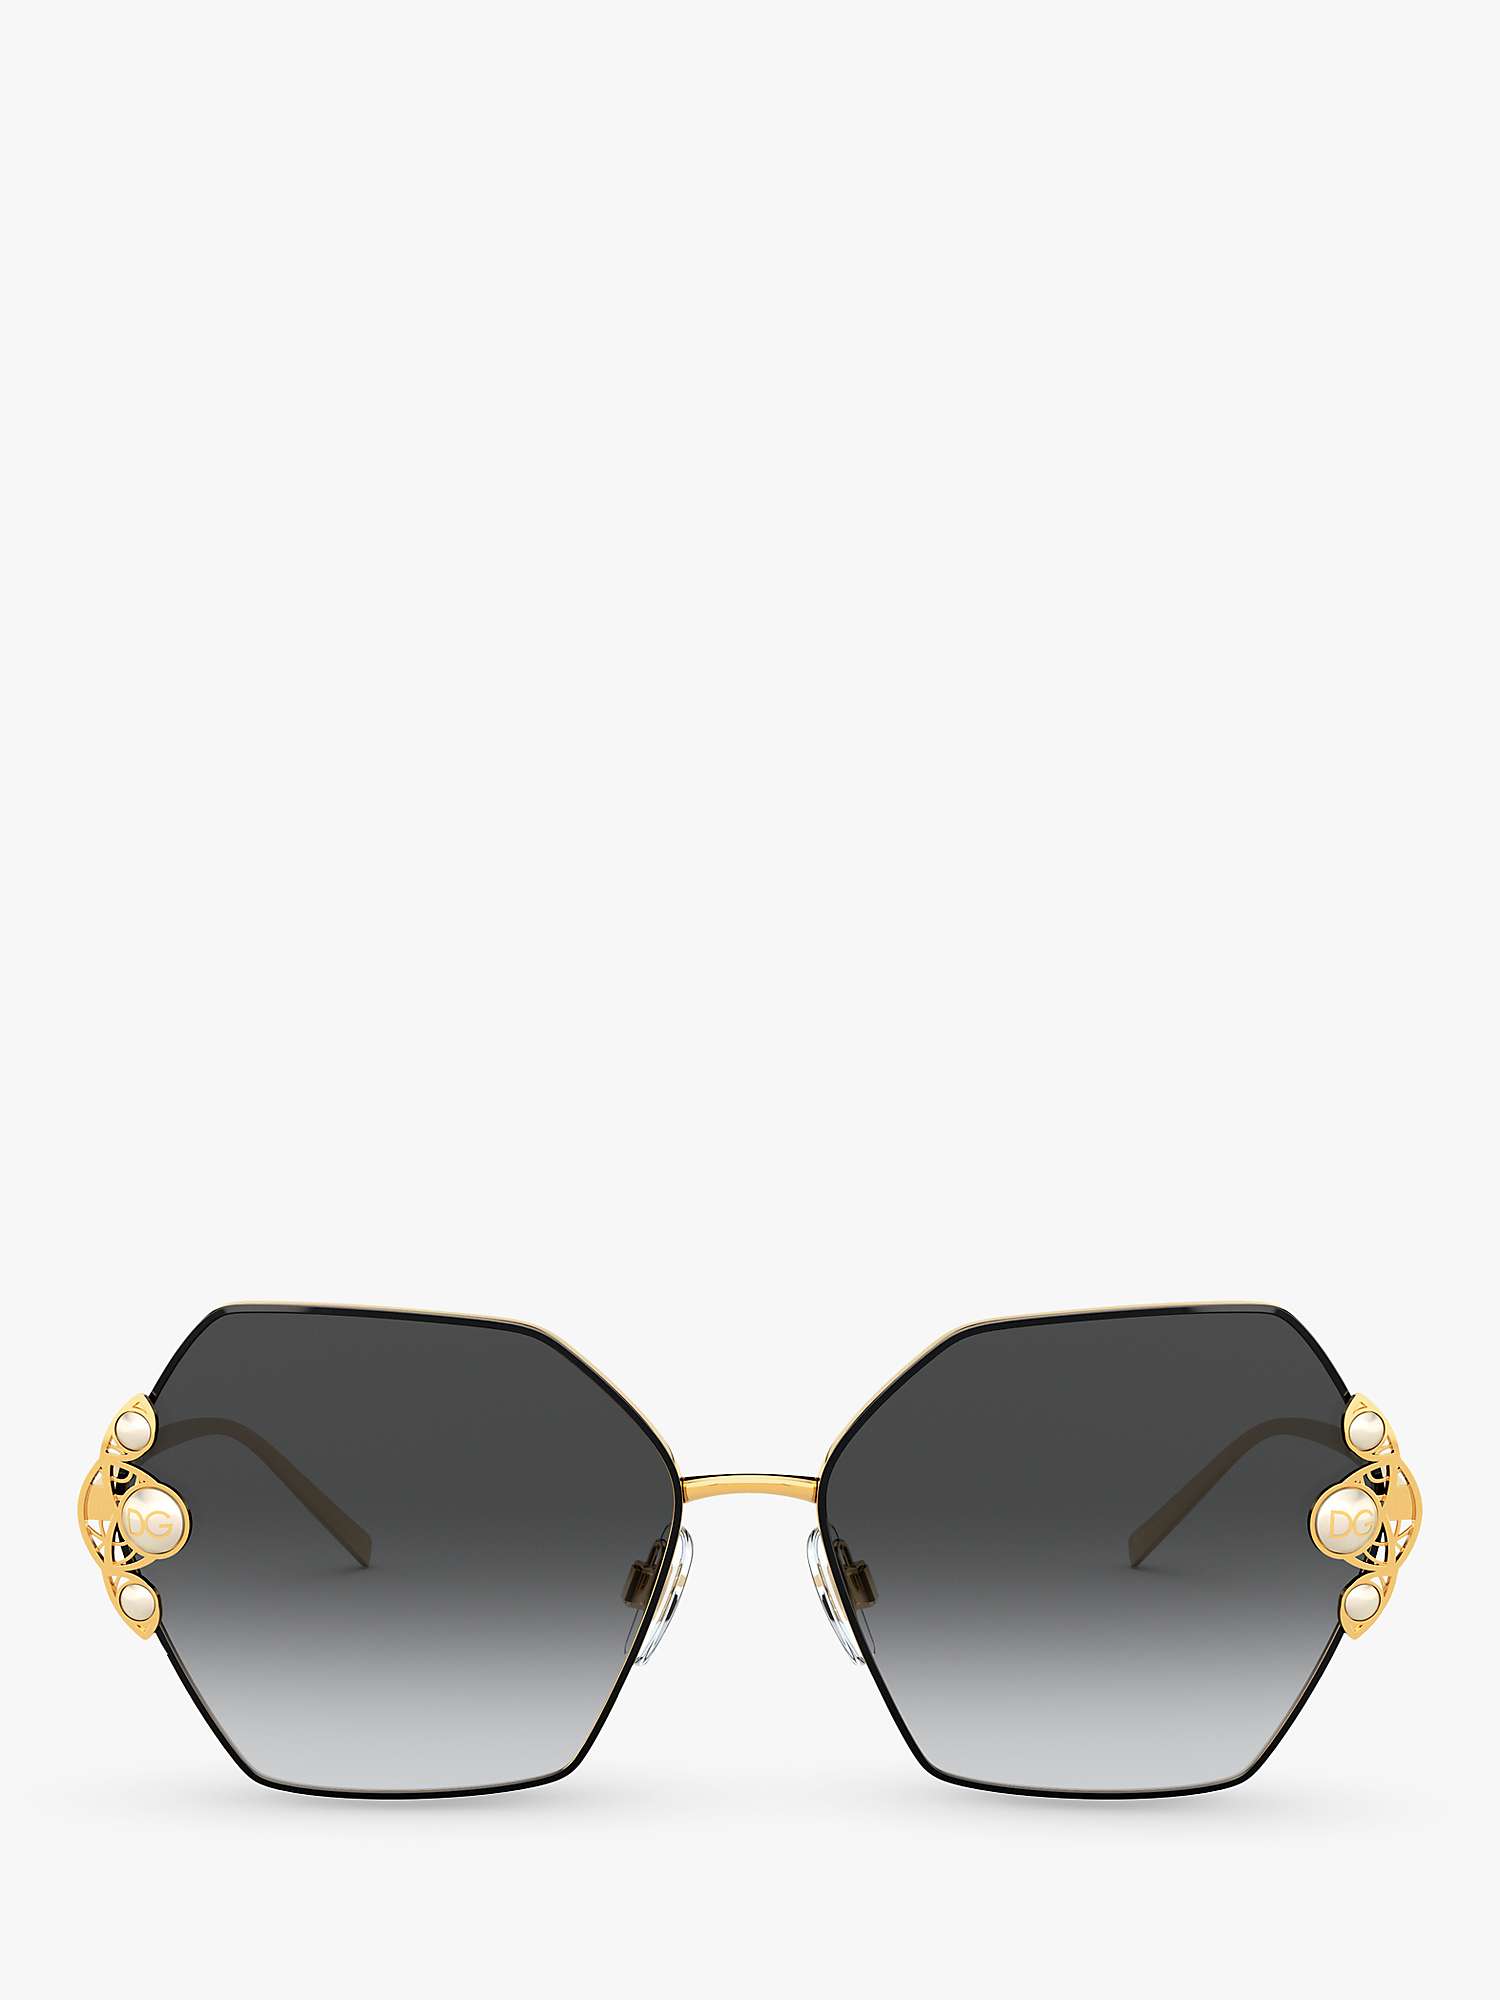 Buy Dolce & Gabbana DG2253H Women's Butterfly Sunglasses, Gold/Black Gradient Online at johnlewis.com